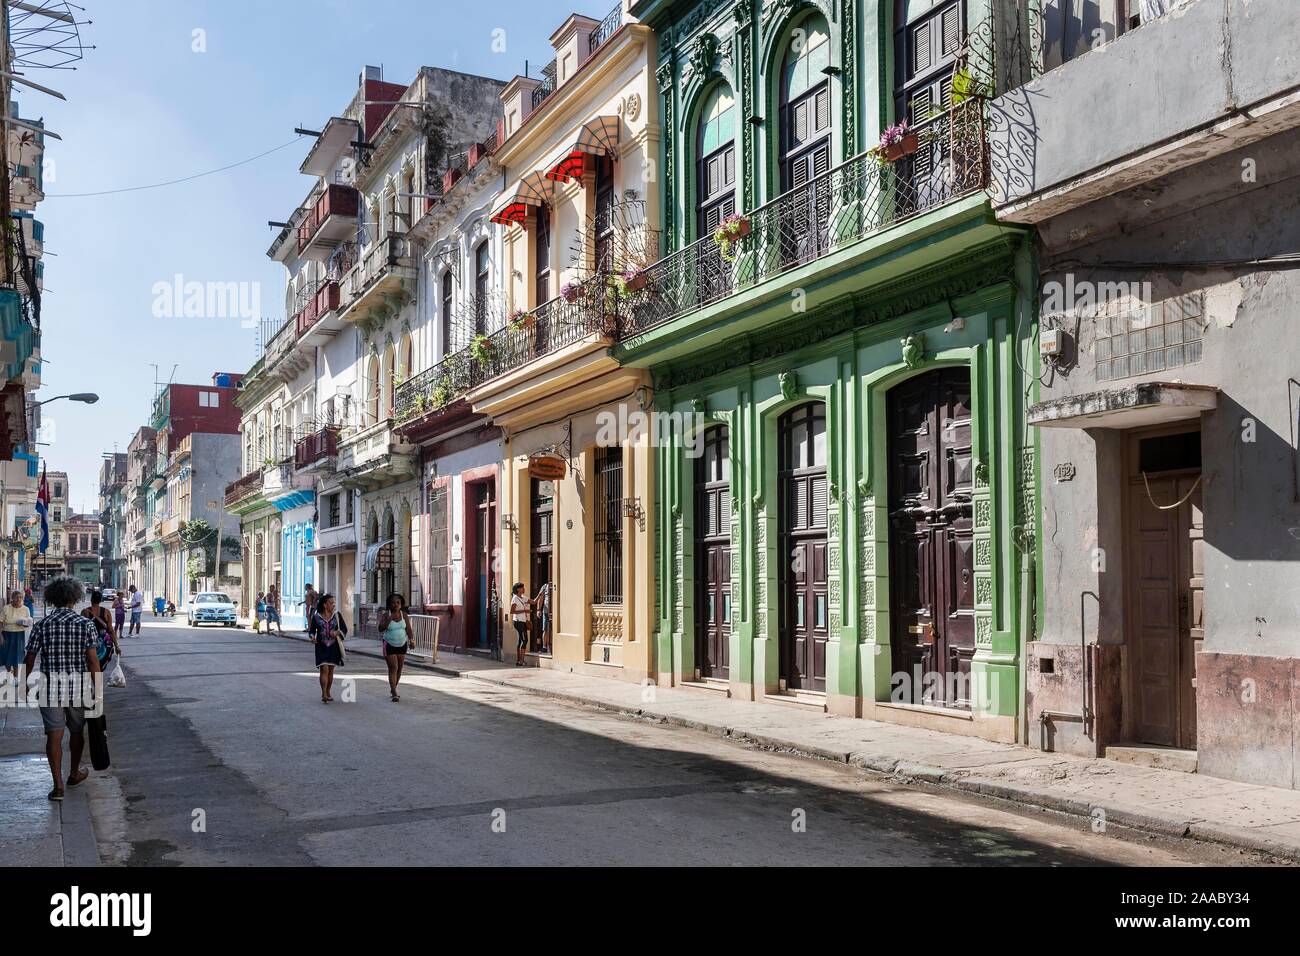 Street scene, colonial houses, Havana, Cuba Stock Photo